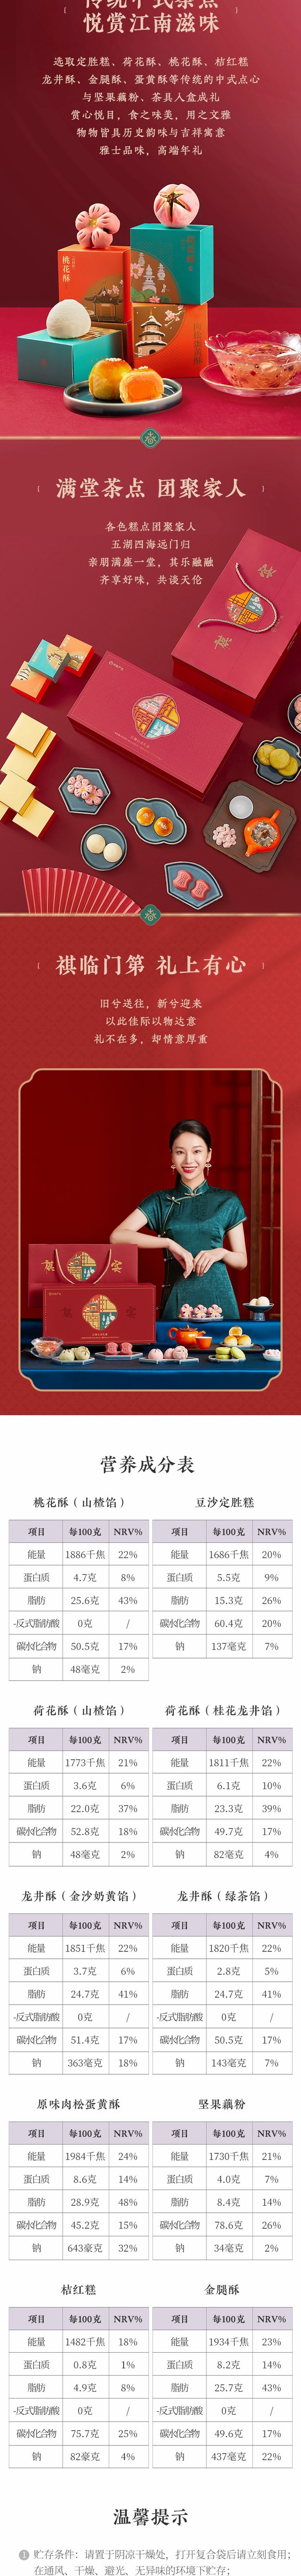 YANXUAN Spring Festival Limited Qi Yan Jaingnan Pastry Gift Box (Gift Bag Included)